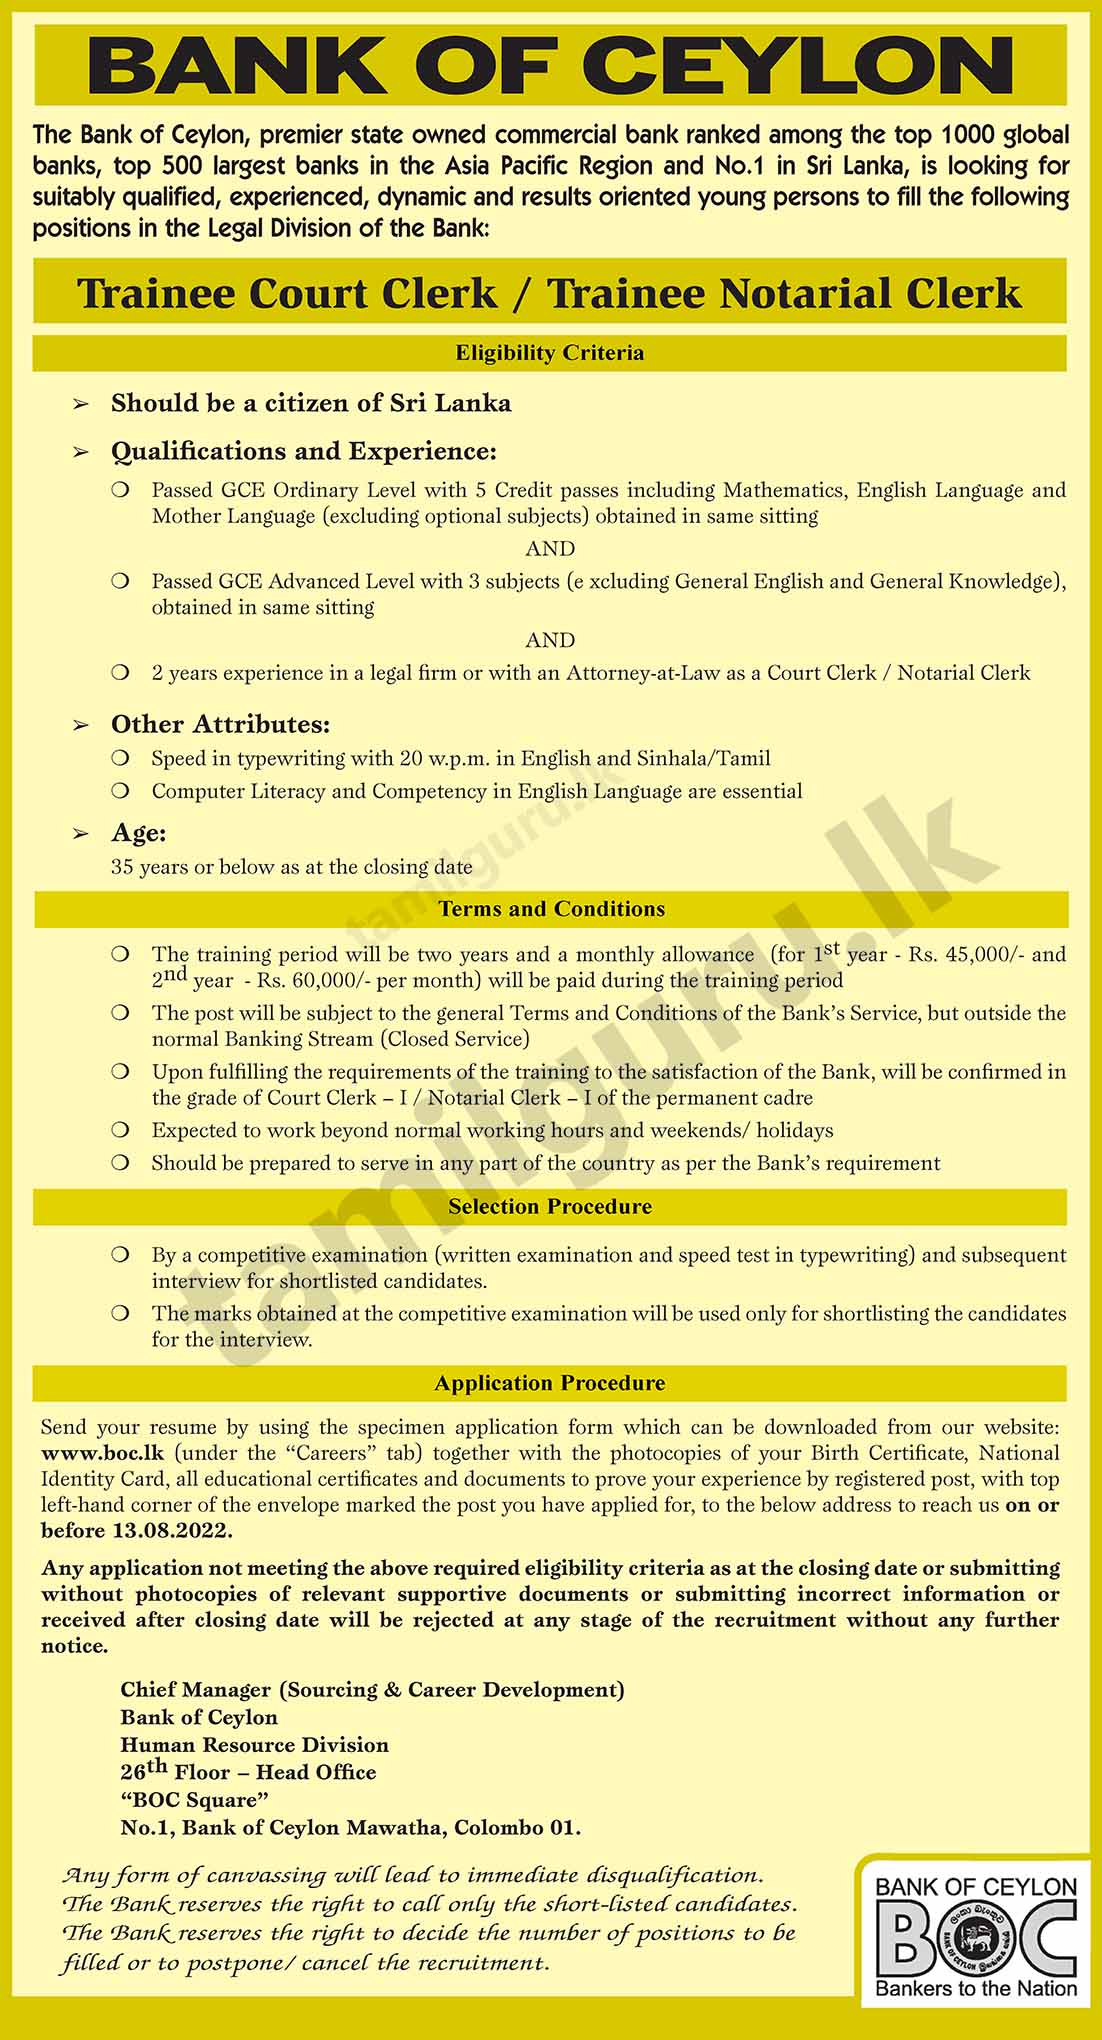 Trainee Court Clerk & Notarial Clerk Vacancies 2022 - Bank of Ceylon (BOC)